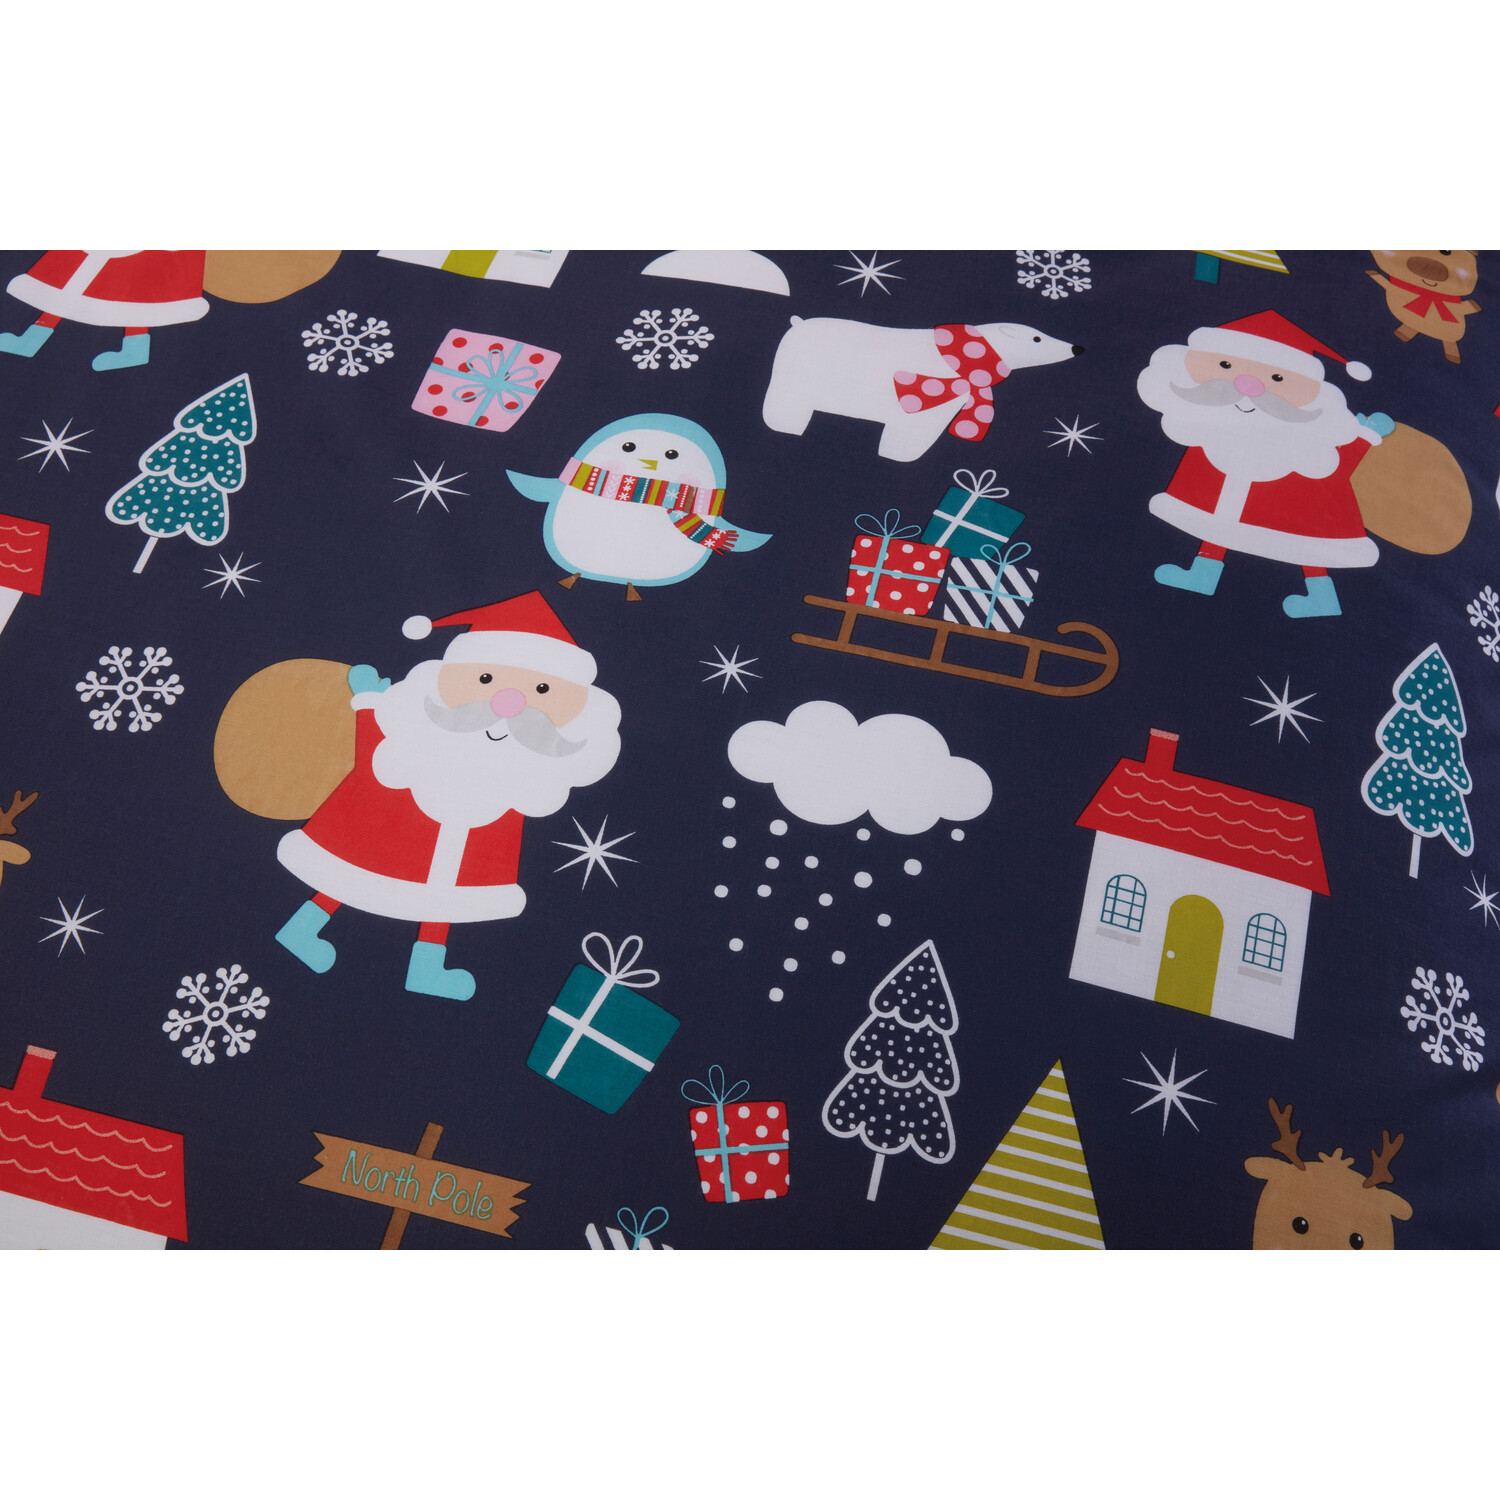 Santa and Friends Duvet Cover and Pillowcase Set - Navy Image 5